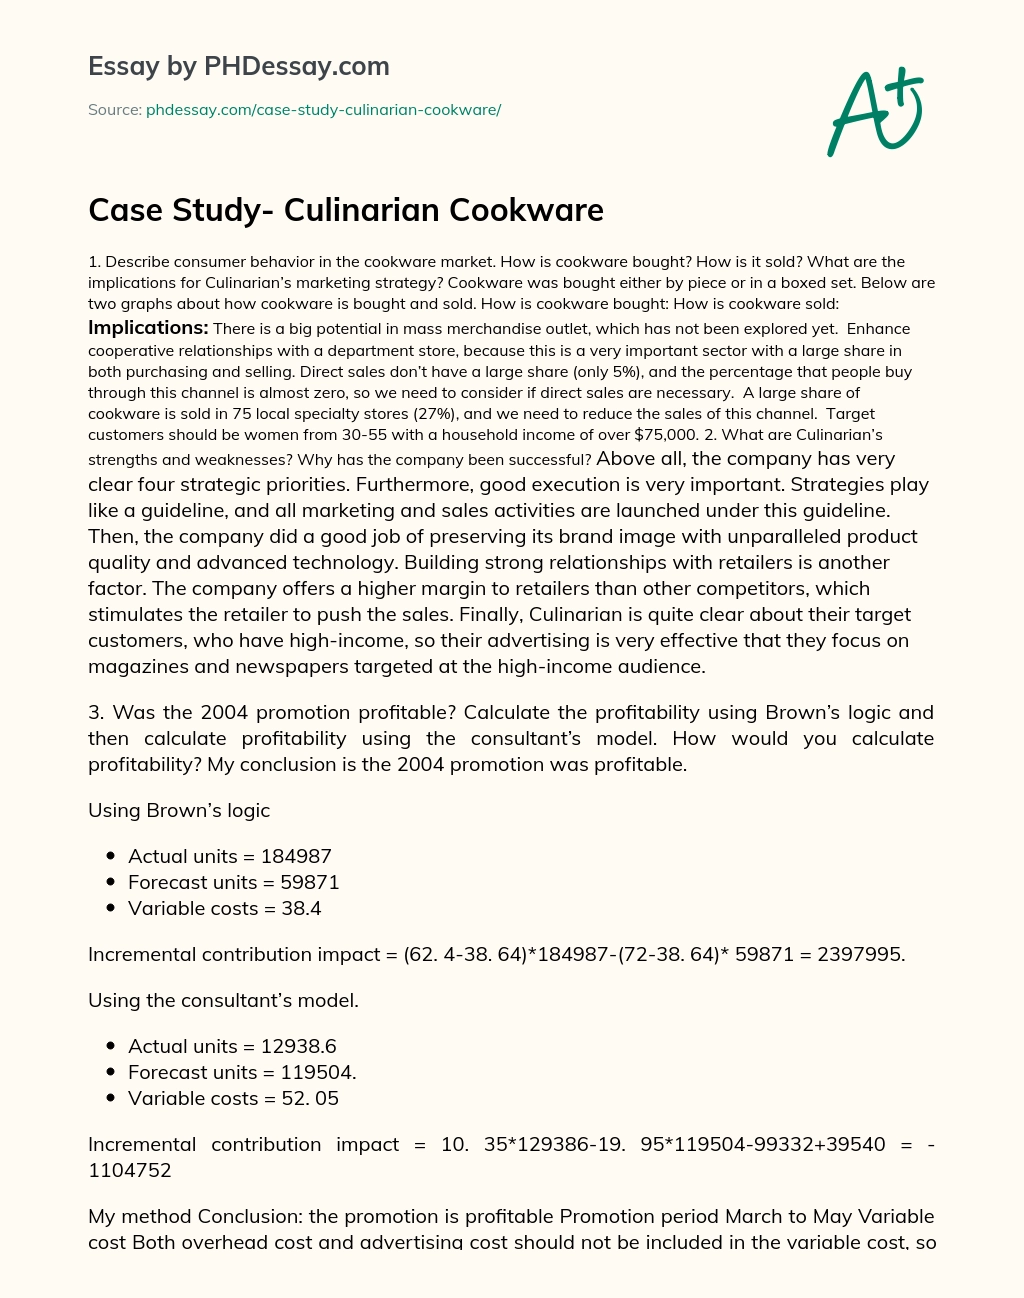 Case Study- Culinarian Cookware essay